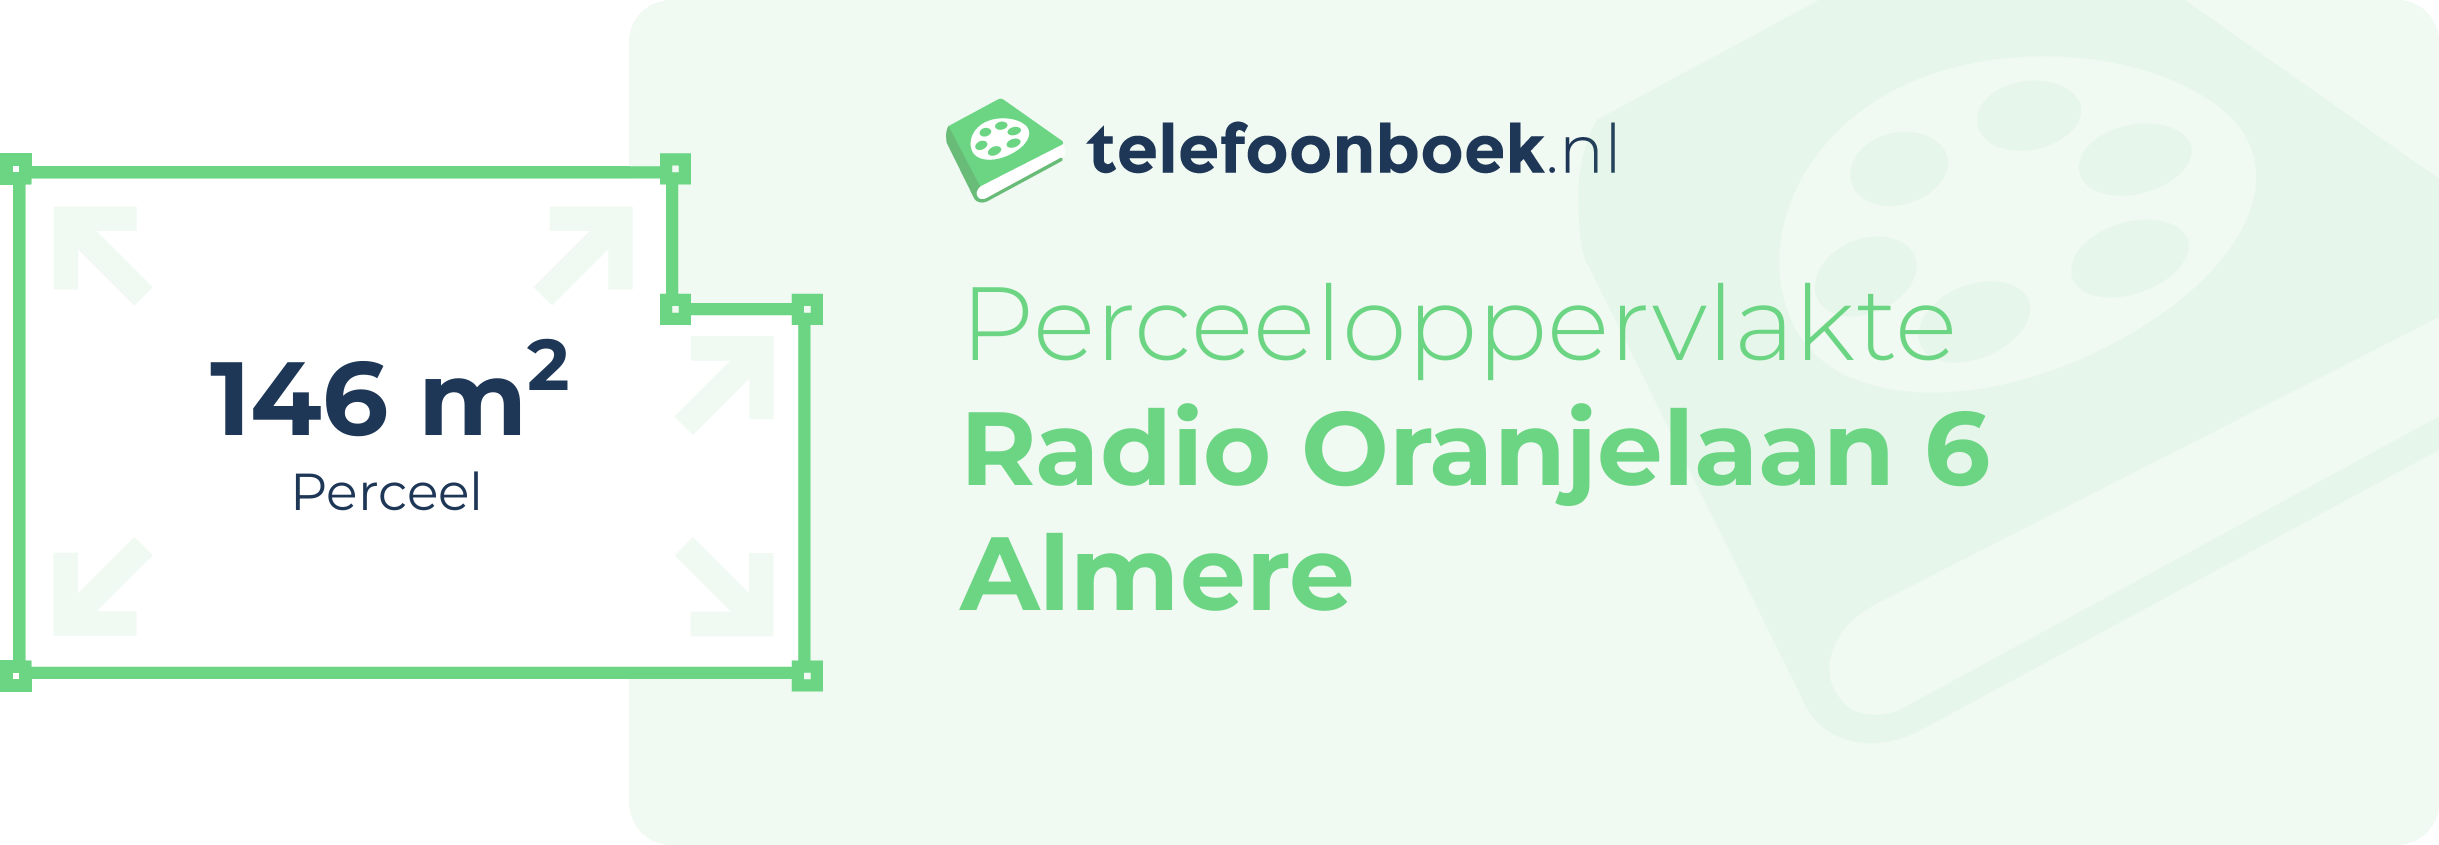 Perceeloppervlakte Radio Oranjelaan 6 Almere